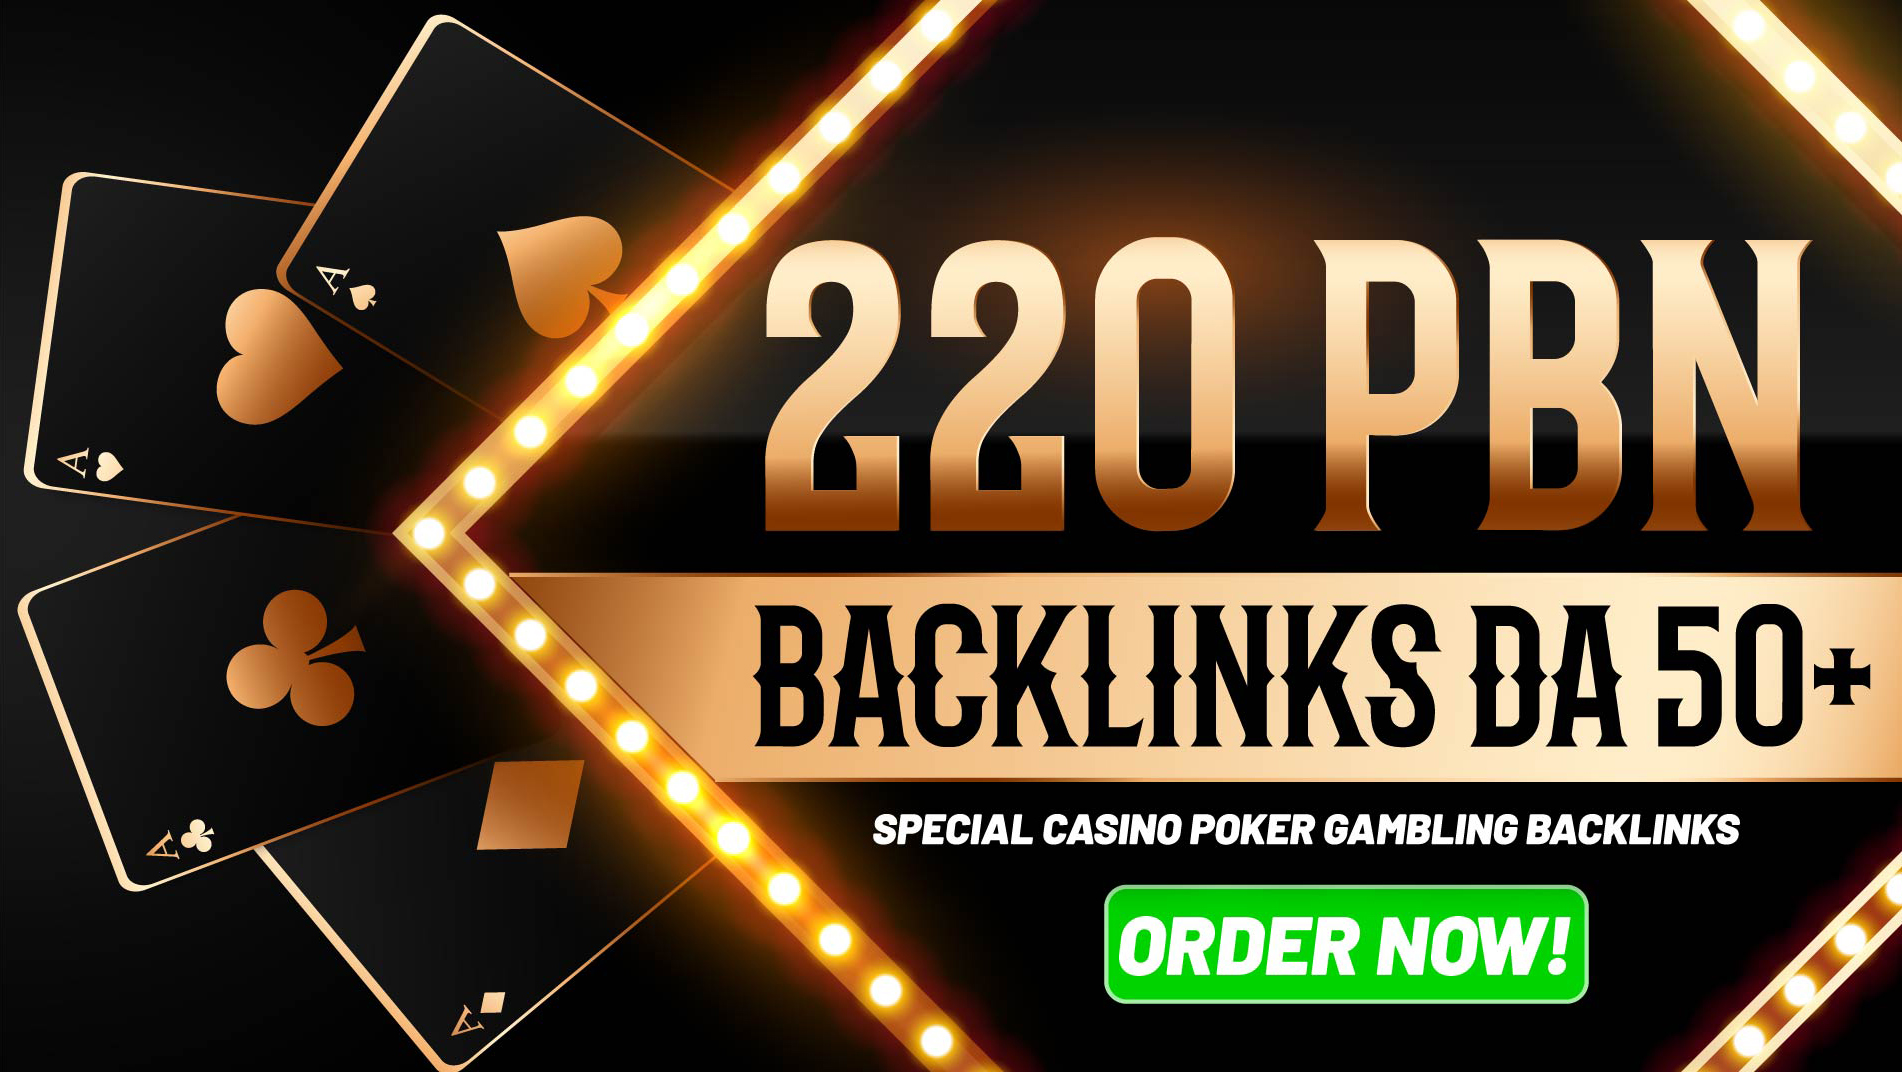 220 PBN Rank your site with casino slots togel bettin JUDI UFABET GAMBLING DA 50+ Backlinks